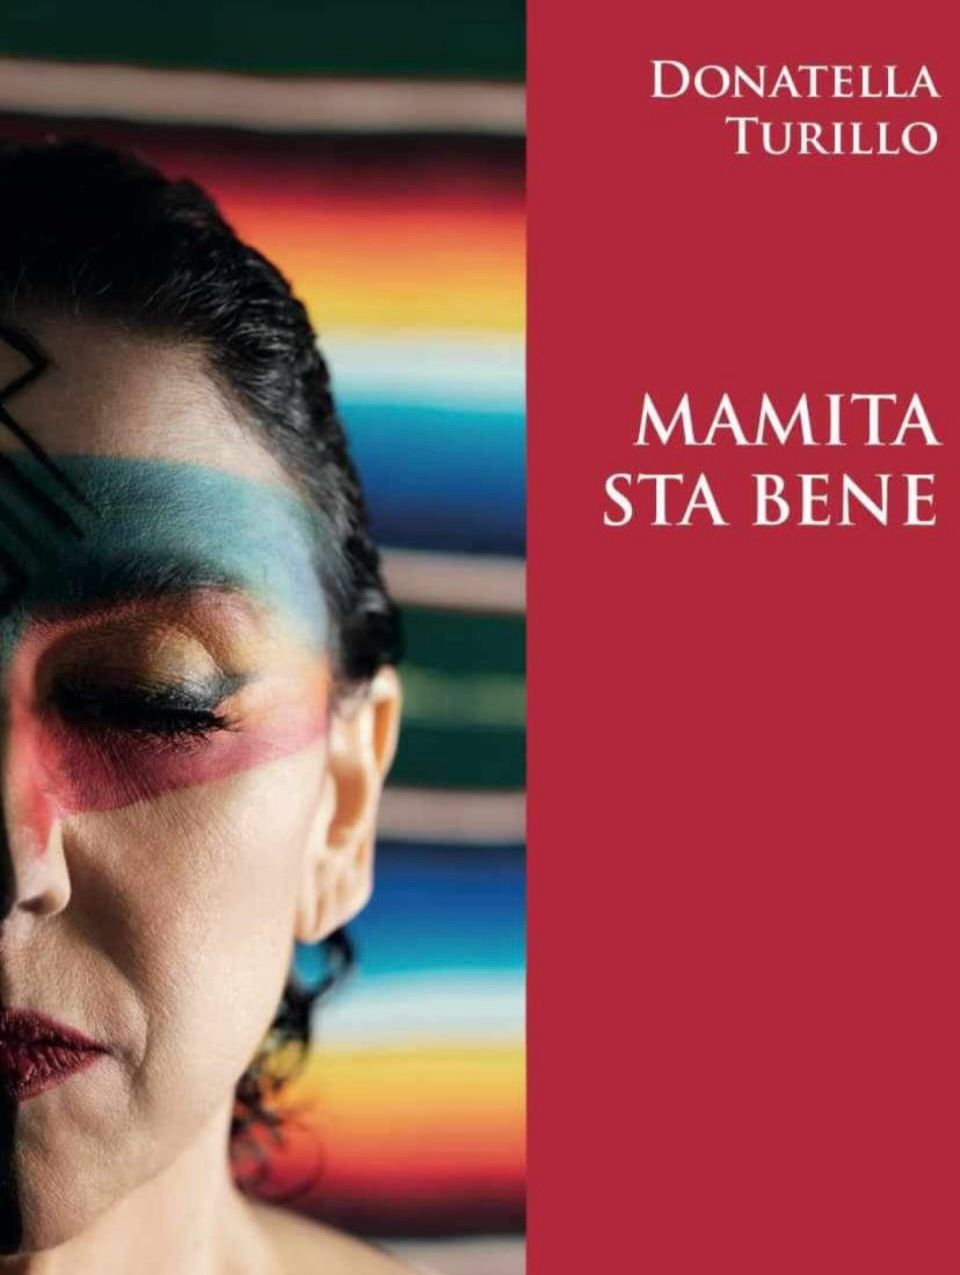 Catania, Donatella Turillo's novel will be presented on May 11th